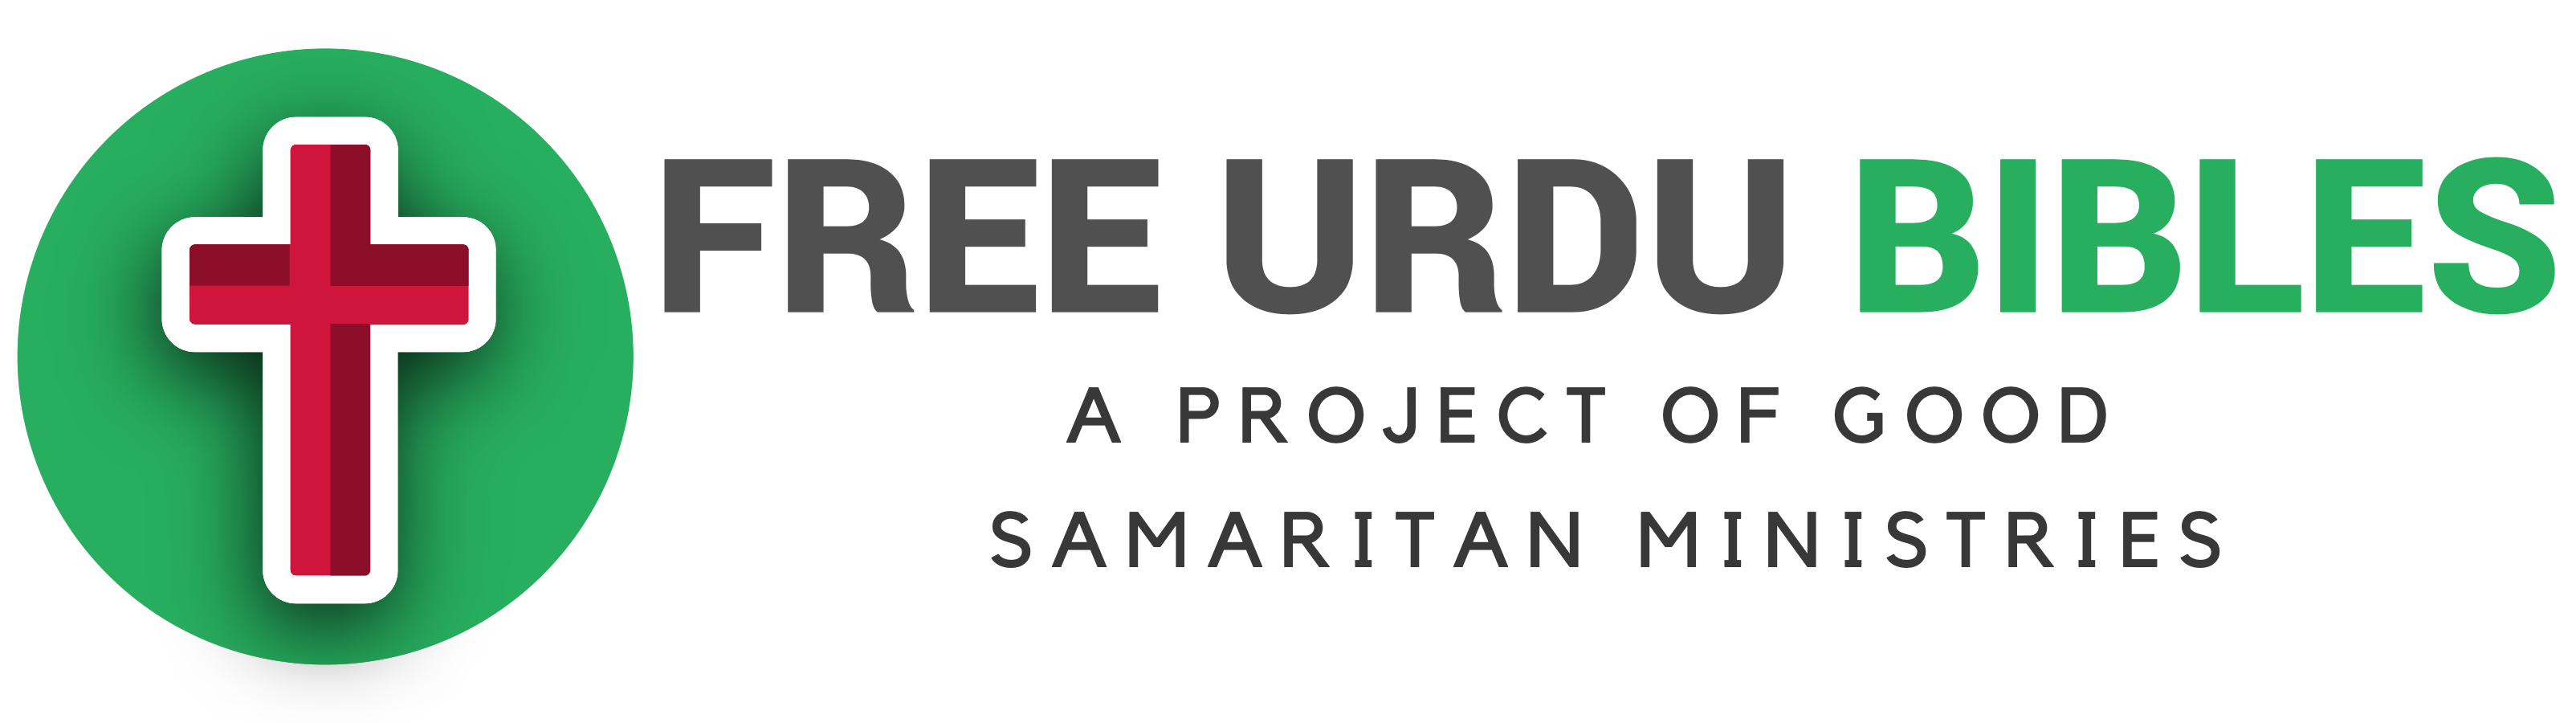 Free Urdu Bibles Distribution | Giving Free Urdu Bibles